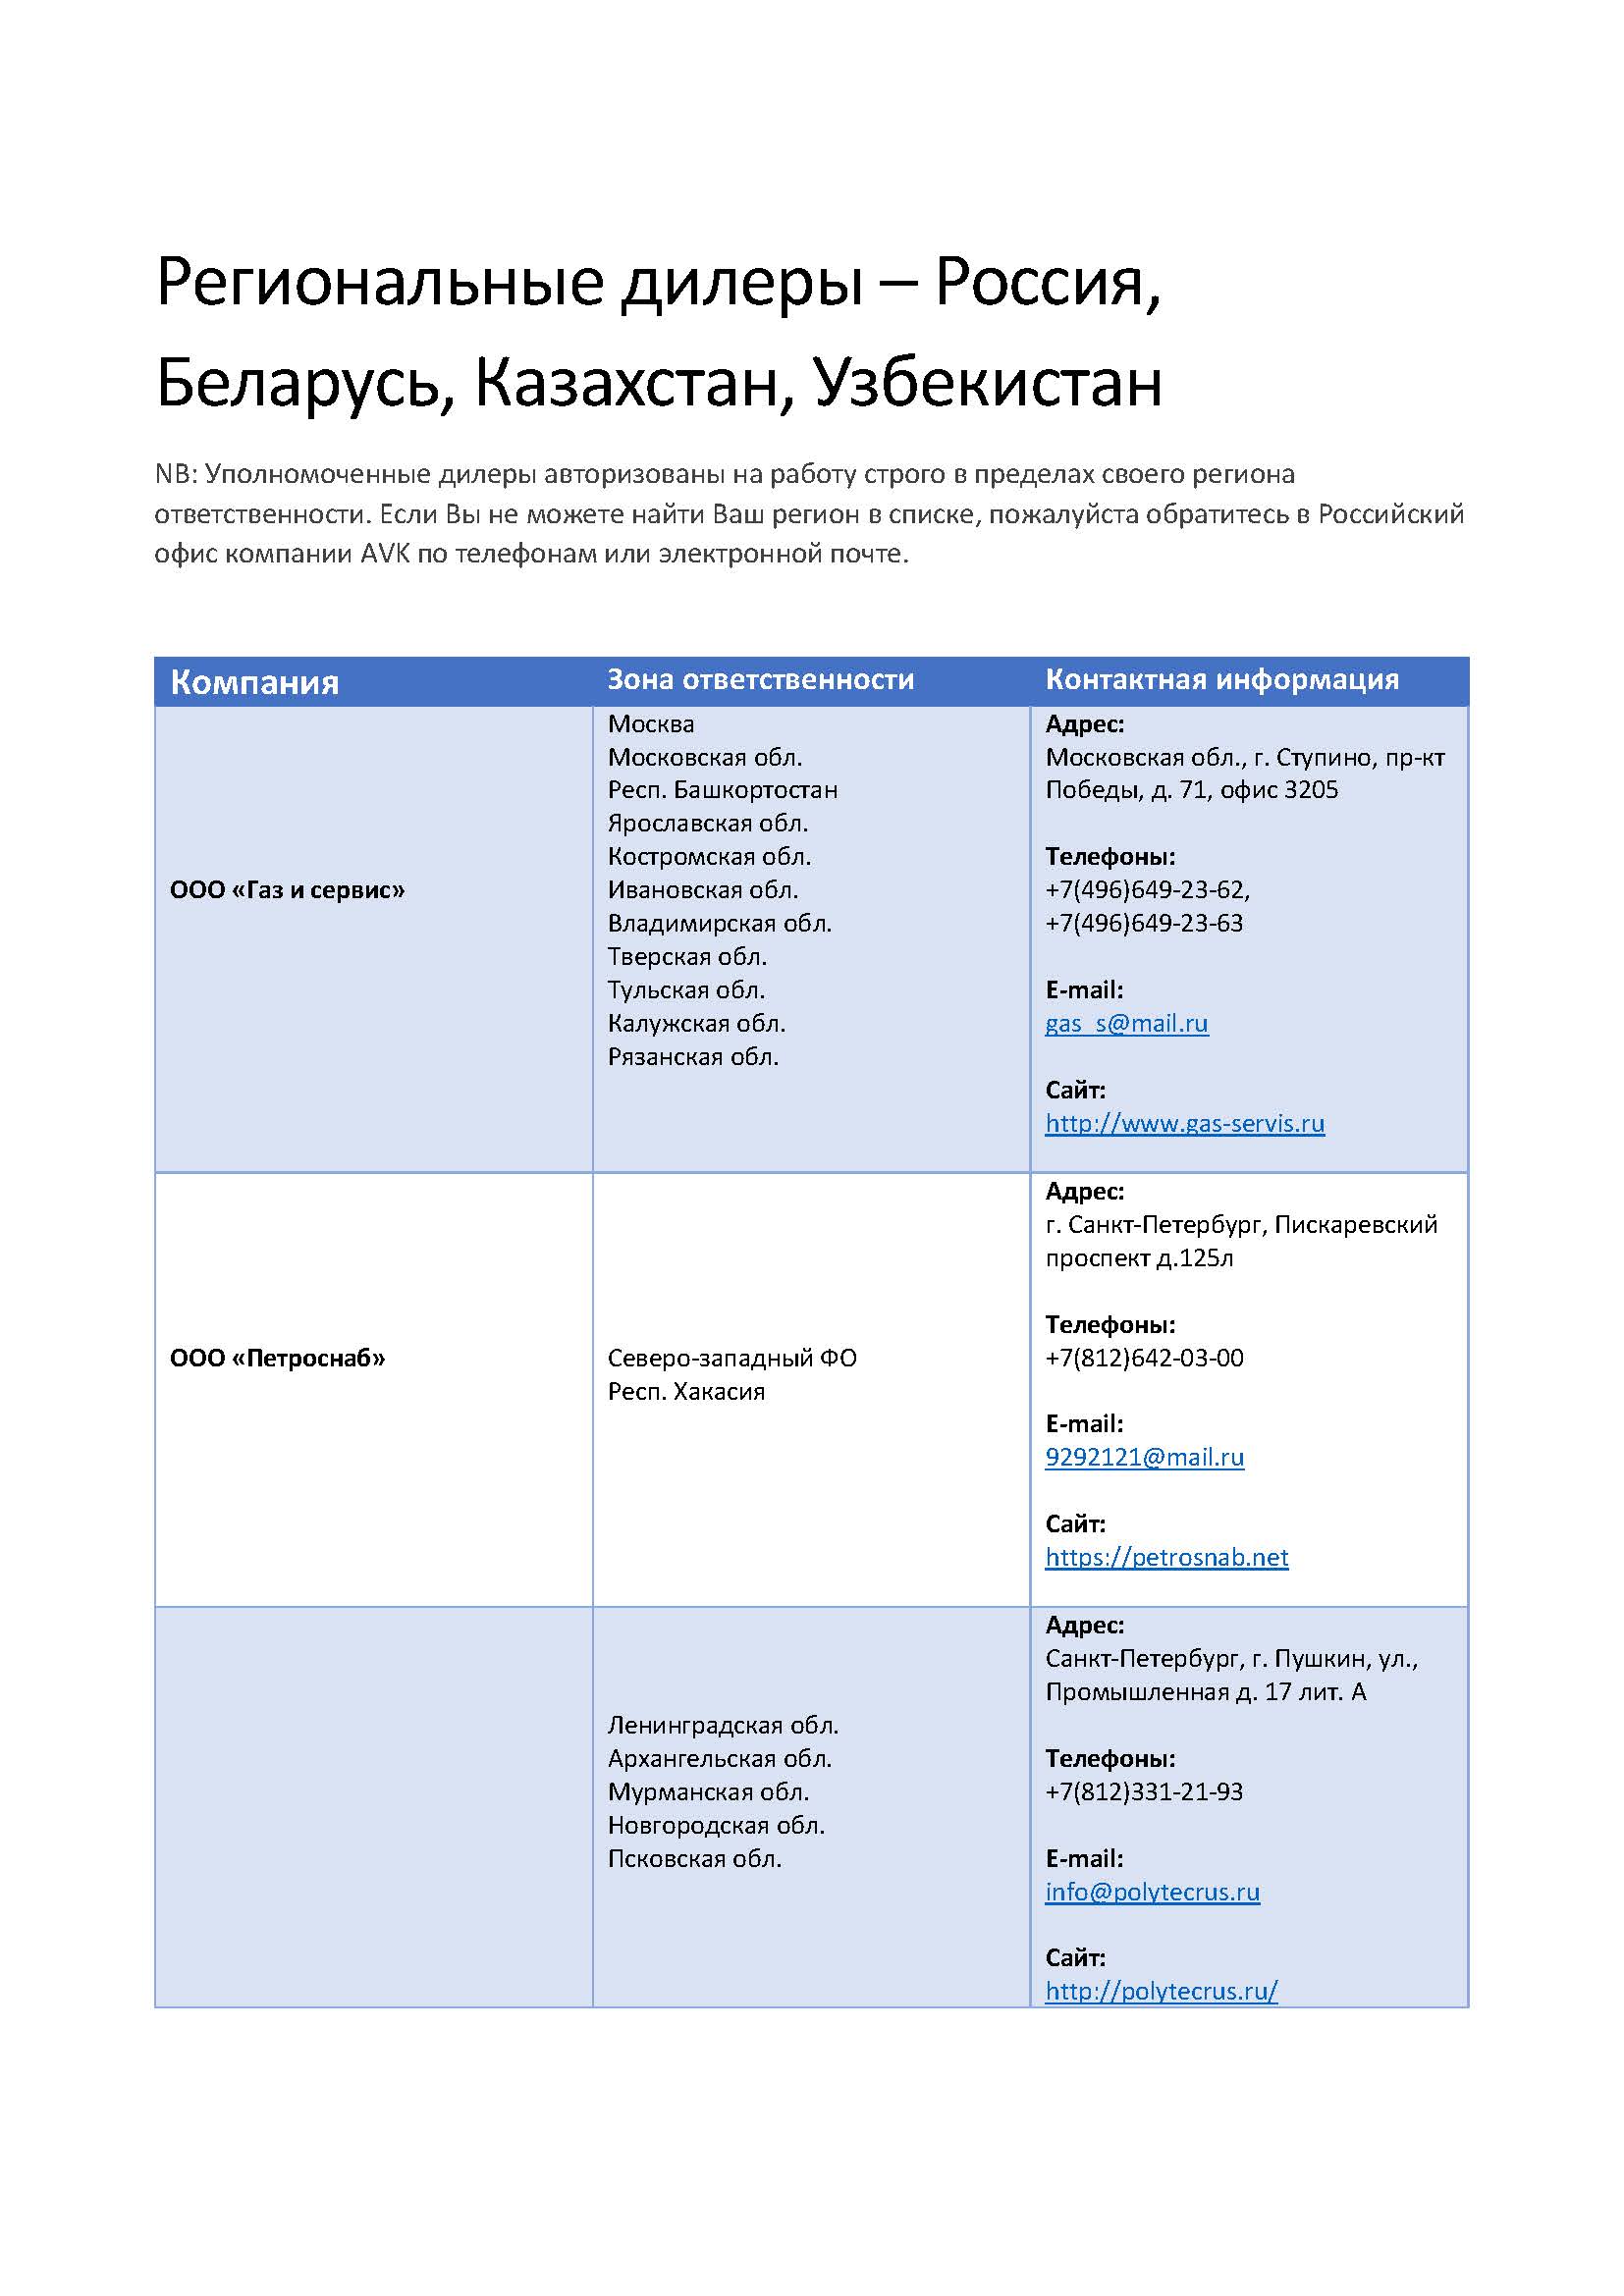 List of Russian AVK product distributors